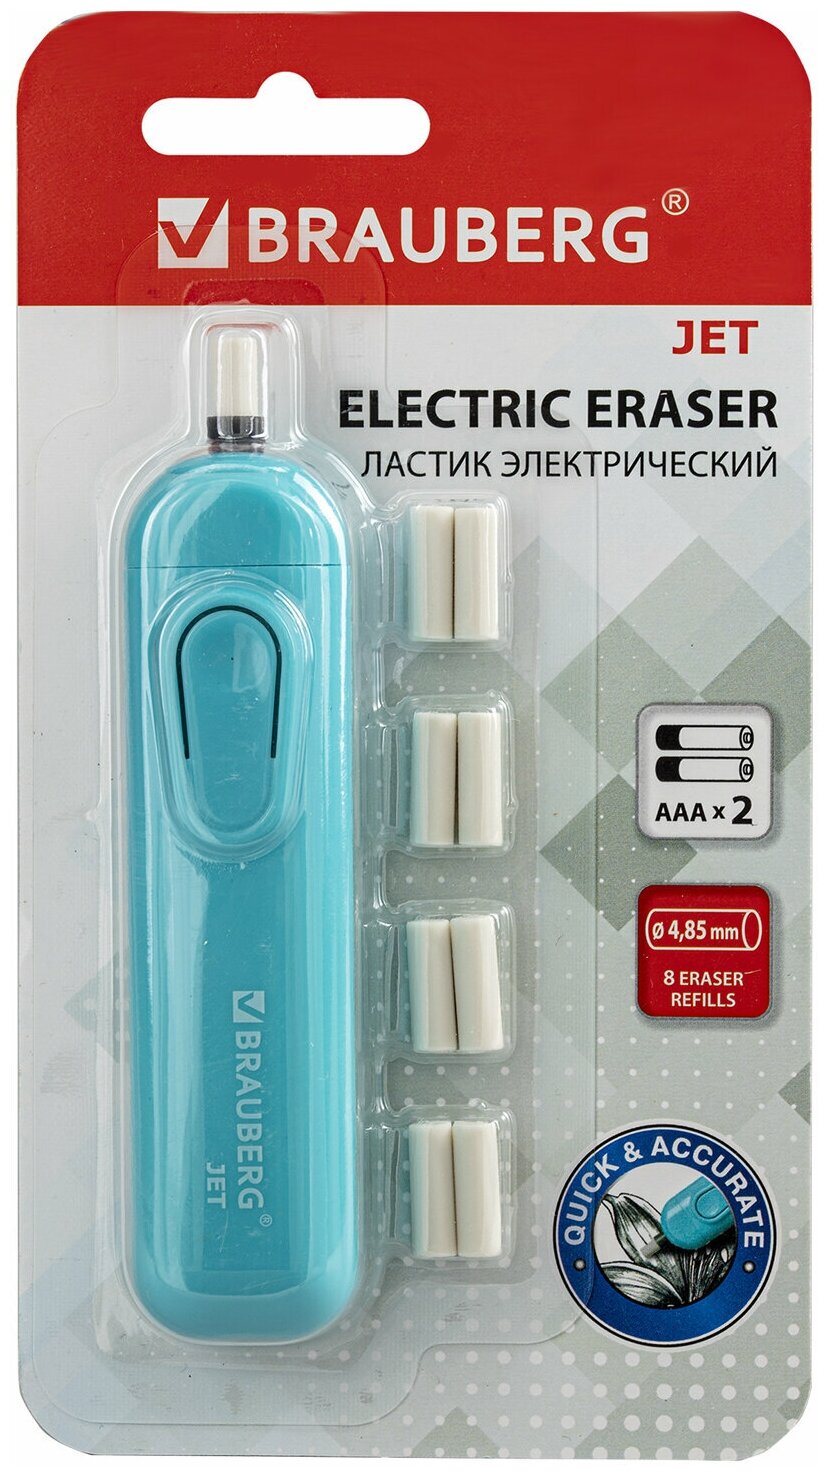 Ластик электрический Brauberg "Jet" питание от 2 батареек ААА, 8 сменных ластиков, голубой (229612)